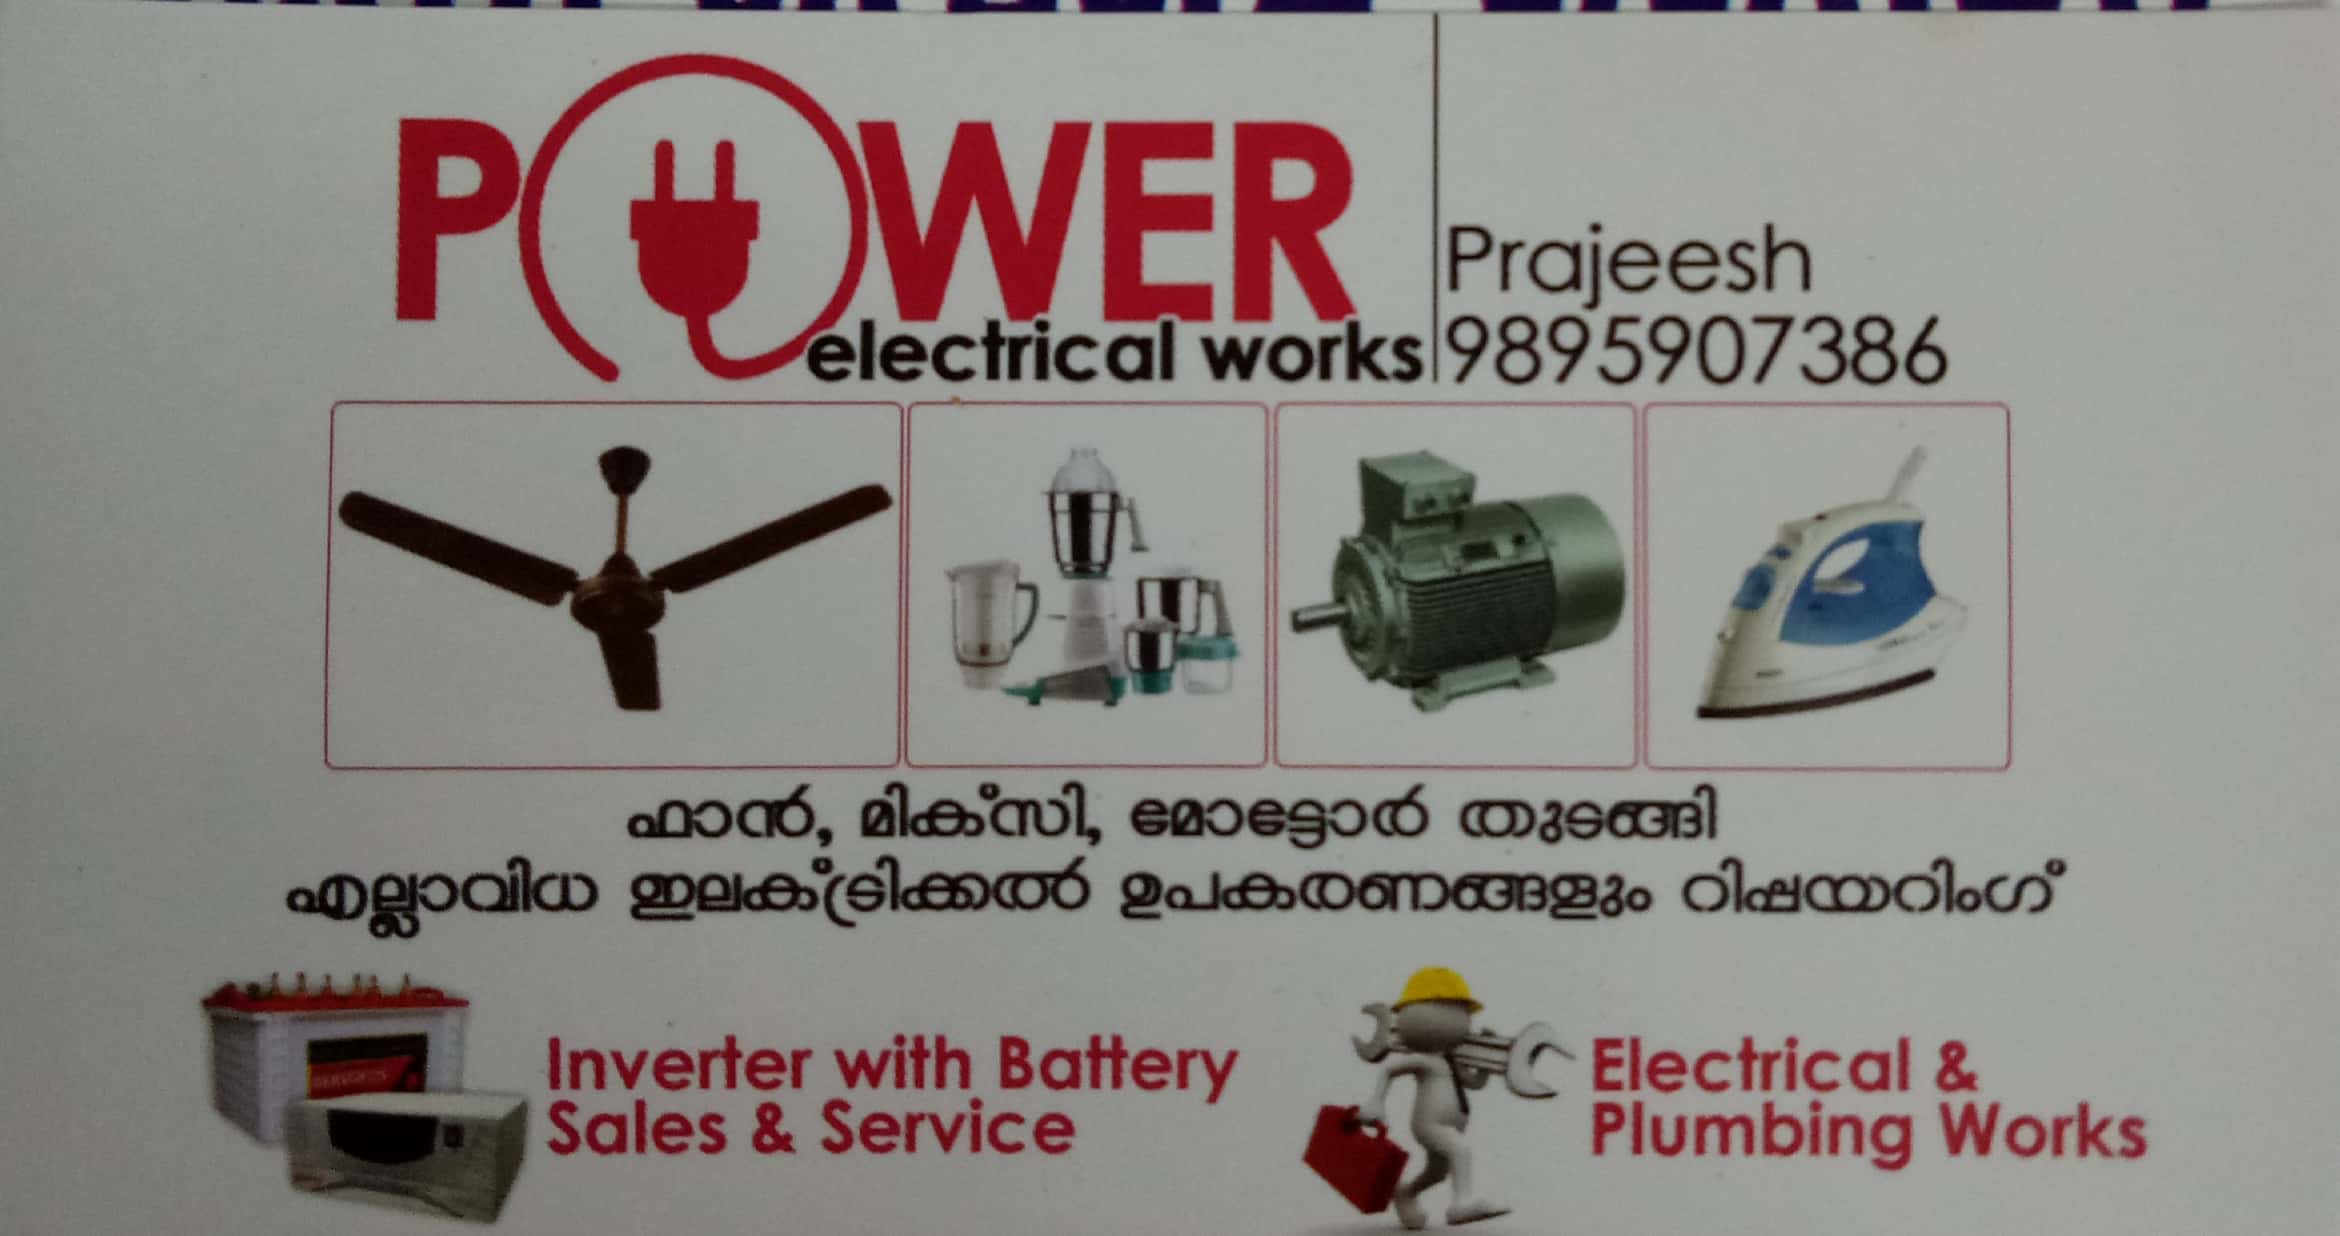 POWER electrical works, ELECTRICAL / PLUMBING / PUMP SETS,  service in Aluva, Ernakulam